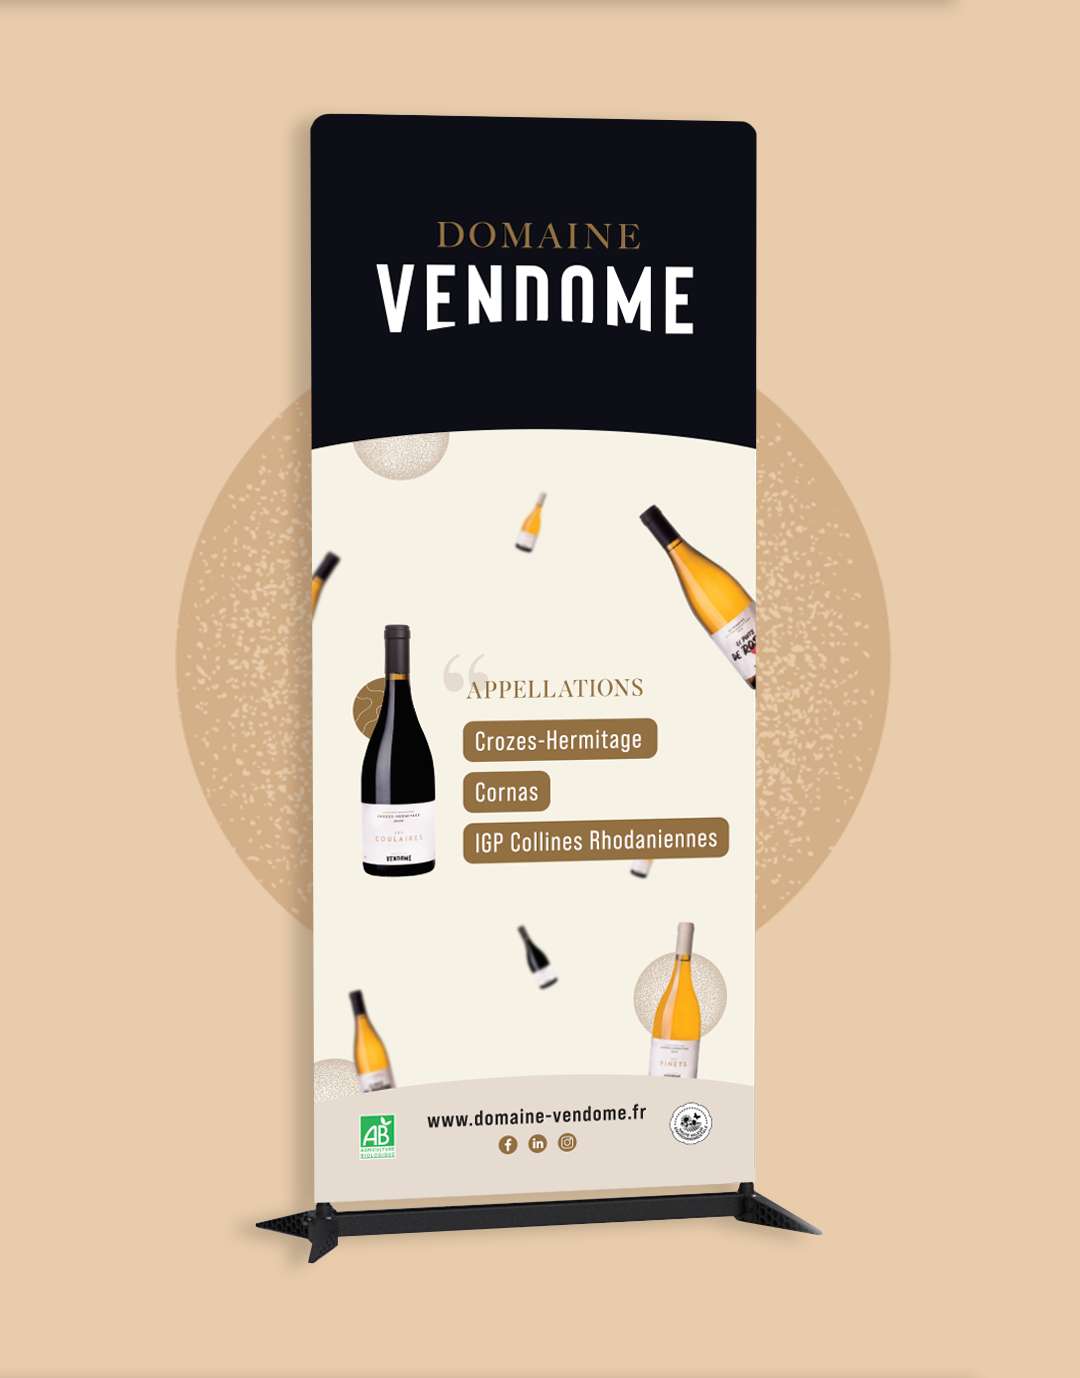 Domaine Vendome - Aerostand Roll Up Kakemono | by Bonne Nouvelle, Agence Communication, Valence (Drôme)